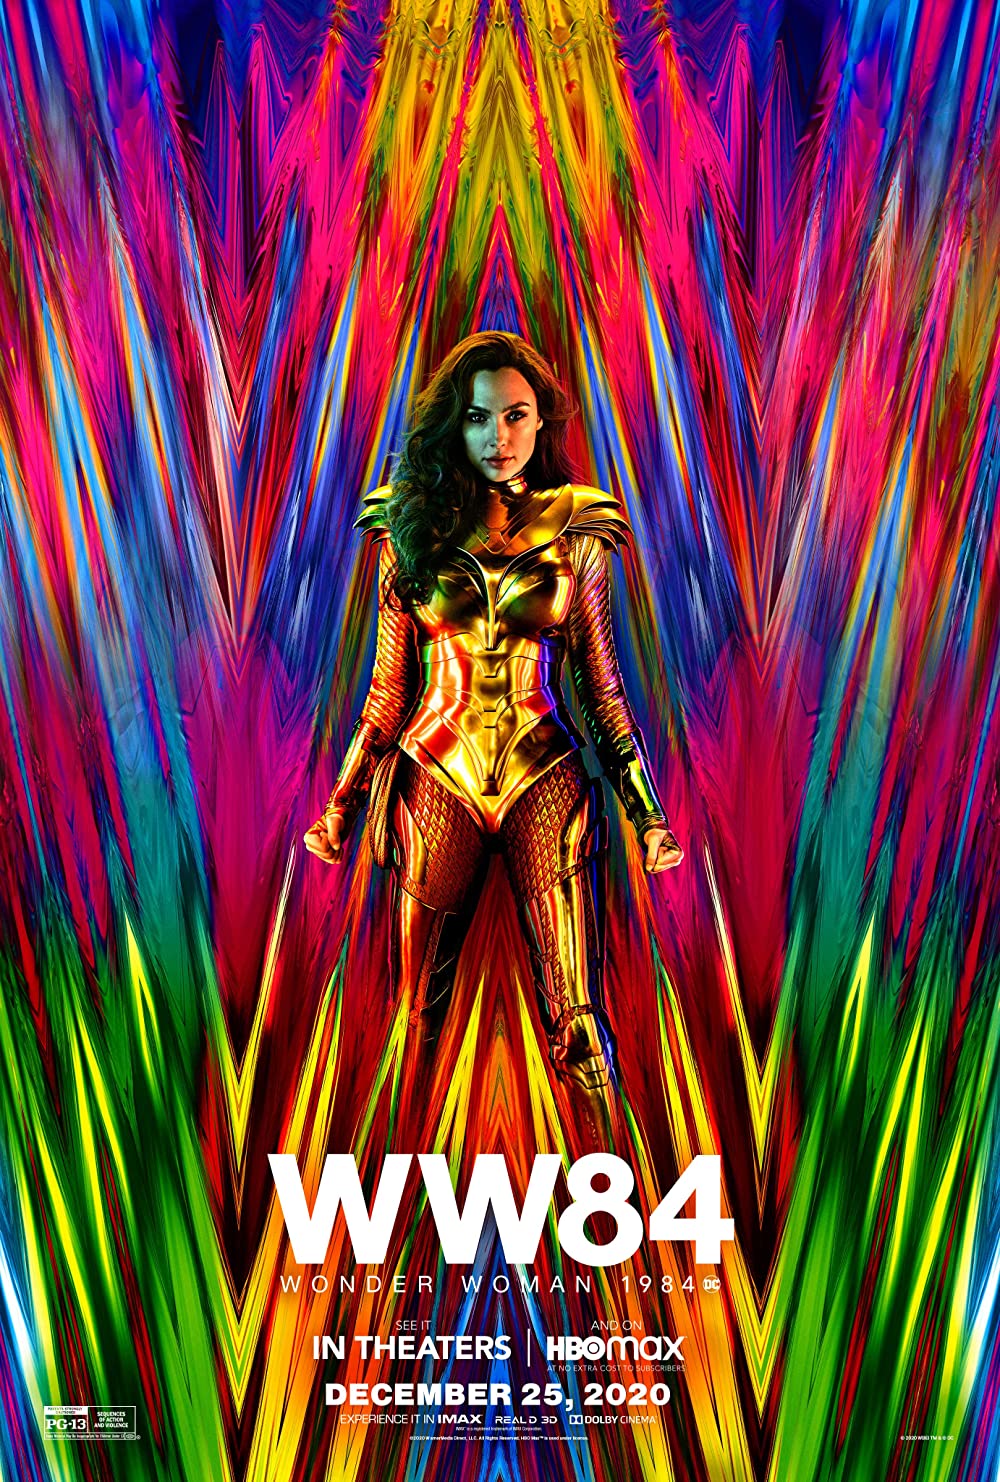 Filmbeschreibung zu Wonder Woman 1984 3D (OV)